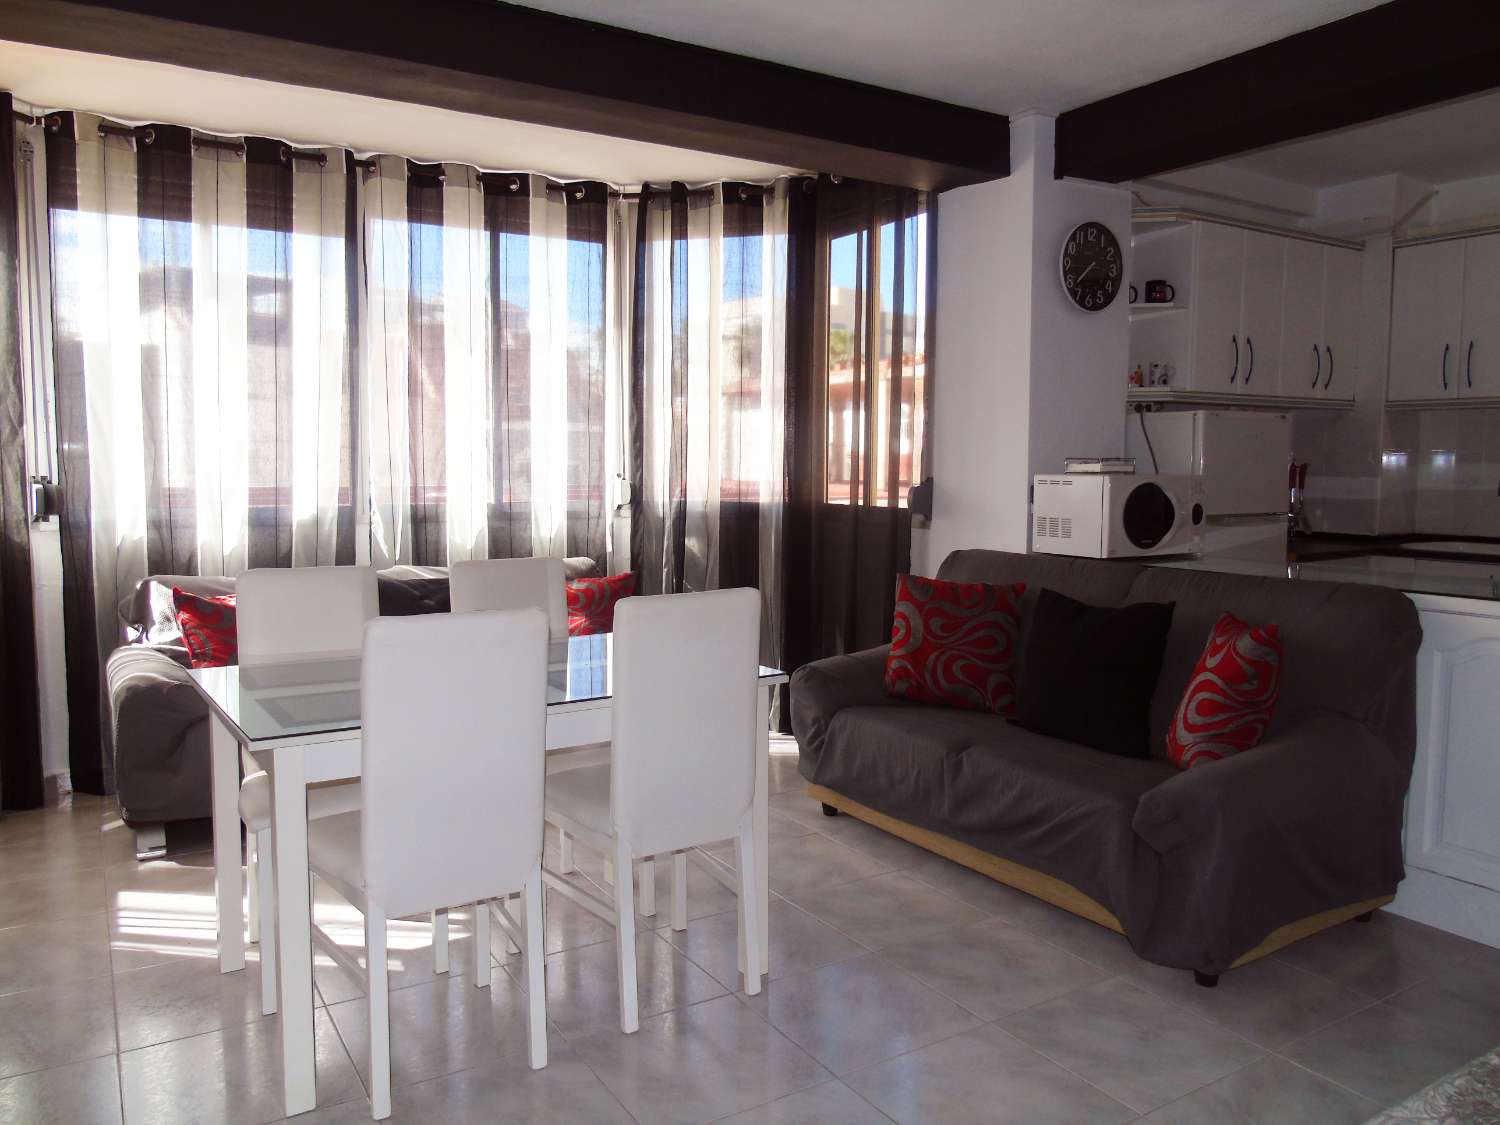 Lägenhet med 1 sovrum i centrum av Torre del Mar, med gemensam pool